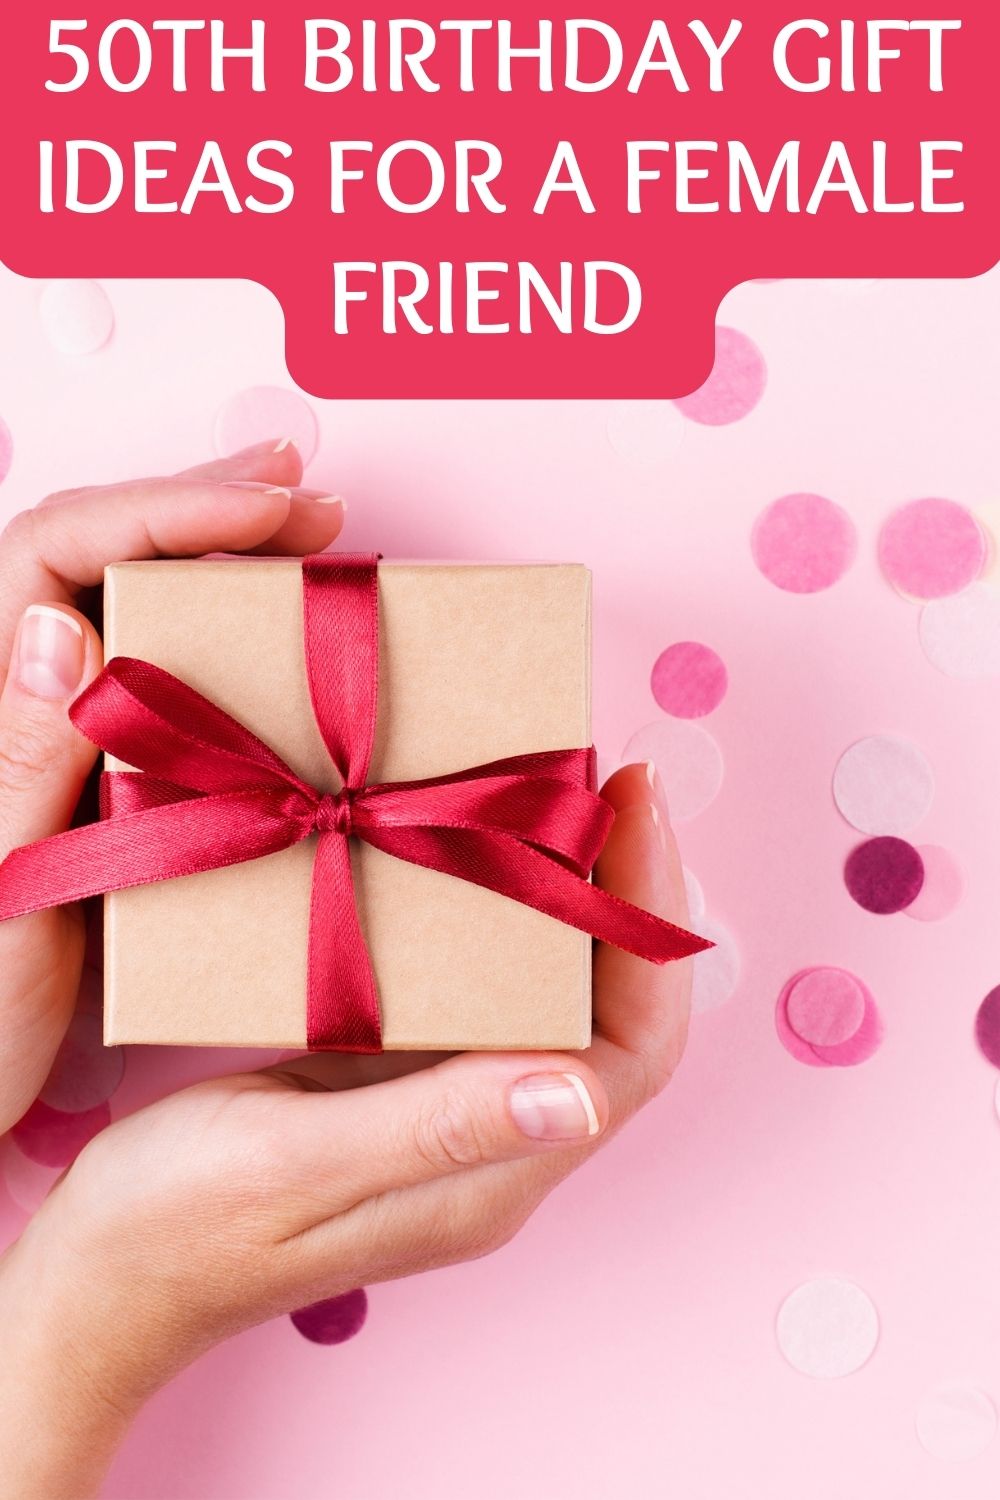 50th birthday gift ideas for a female friend